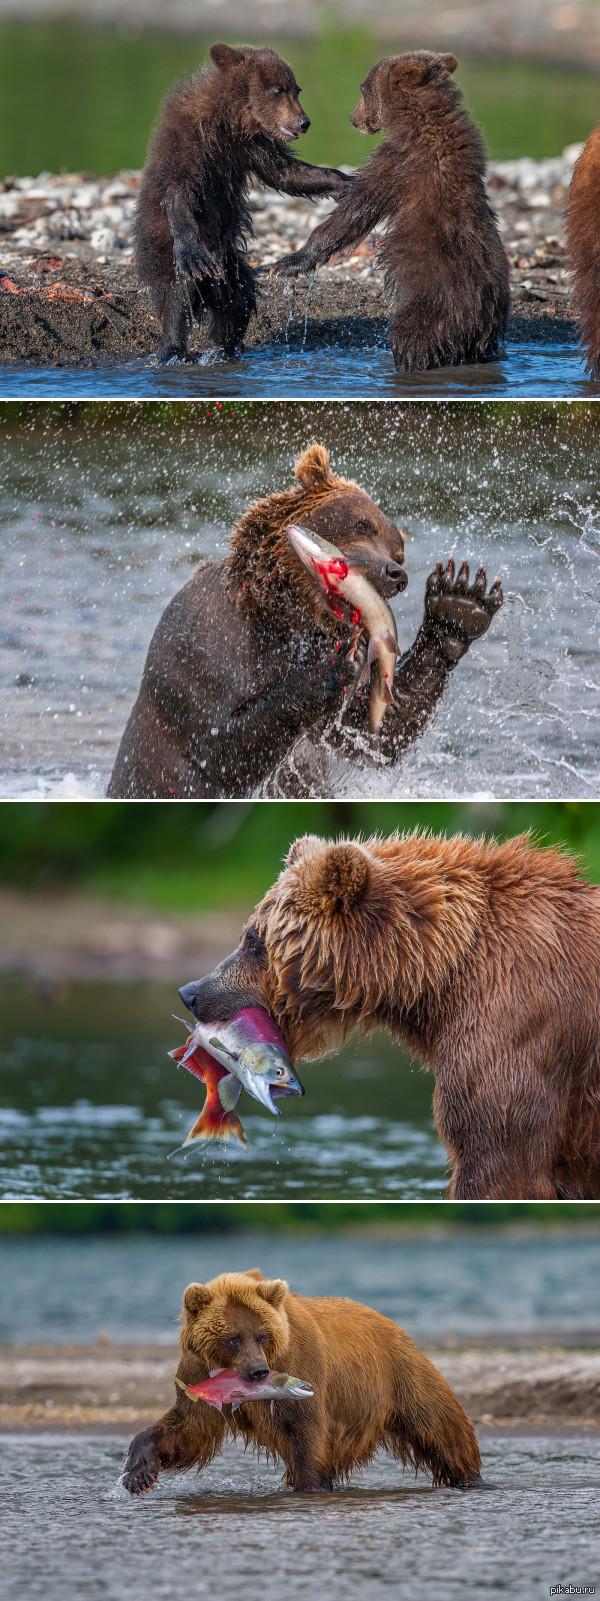 Looking forward to dinner =) - Kamchatka, Bear, Sergey Ivanov, The Bears